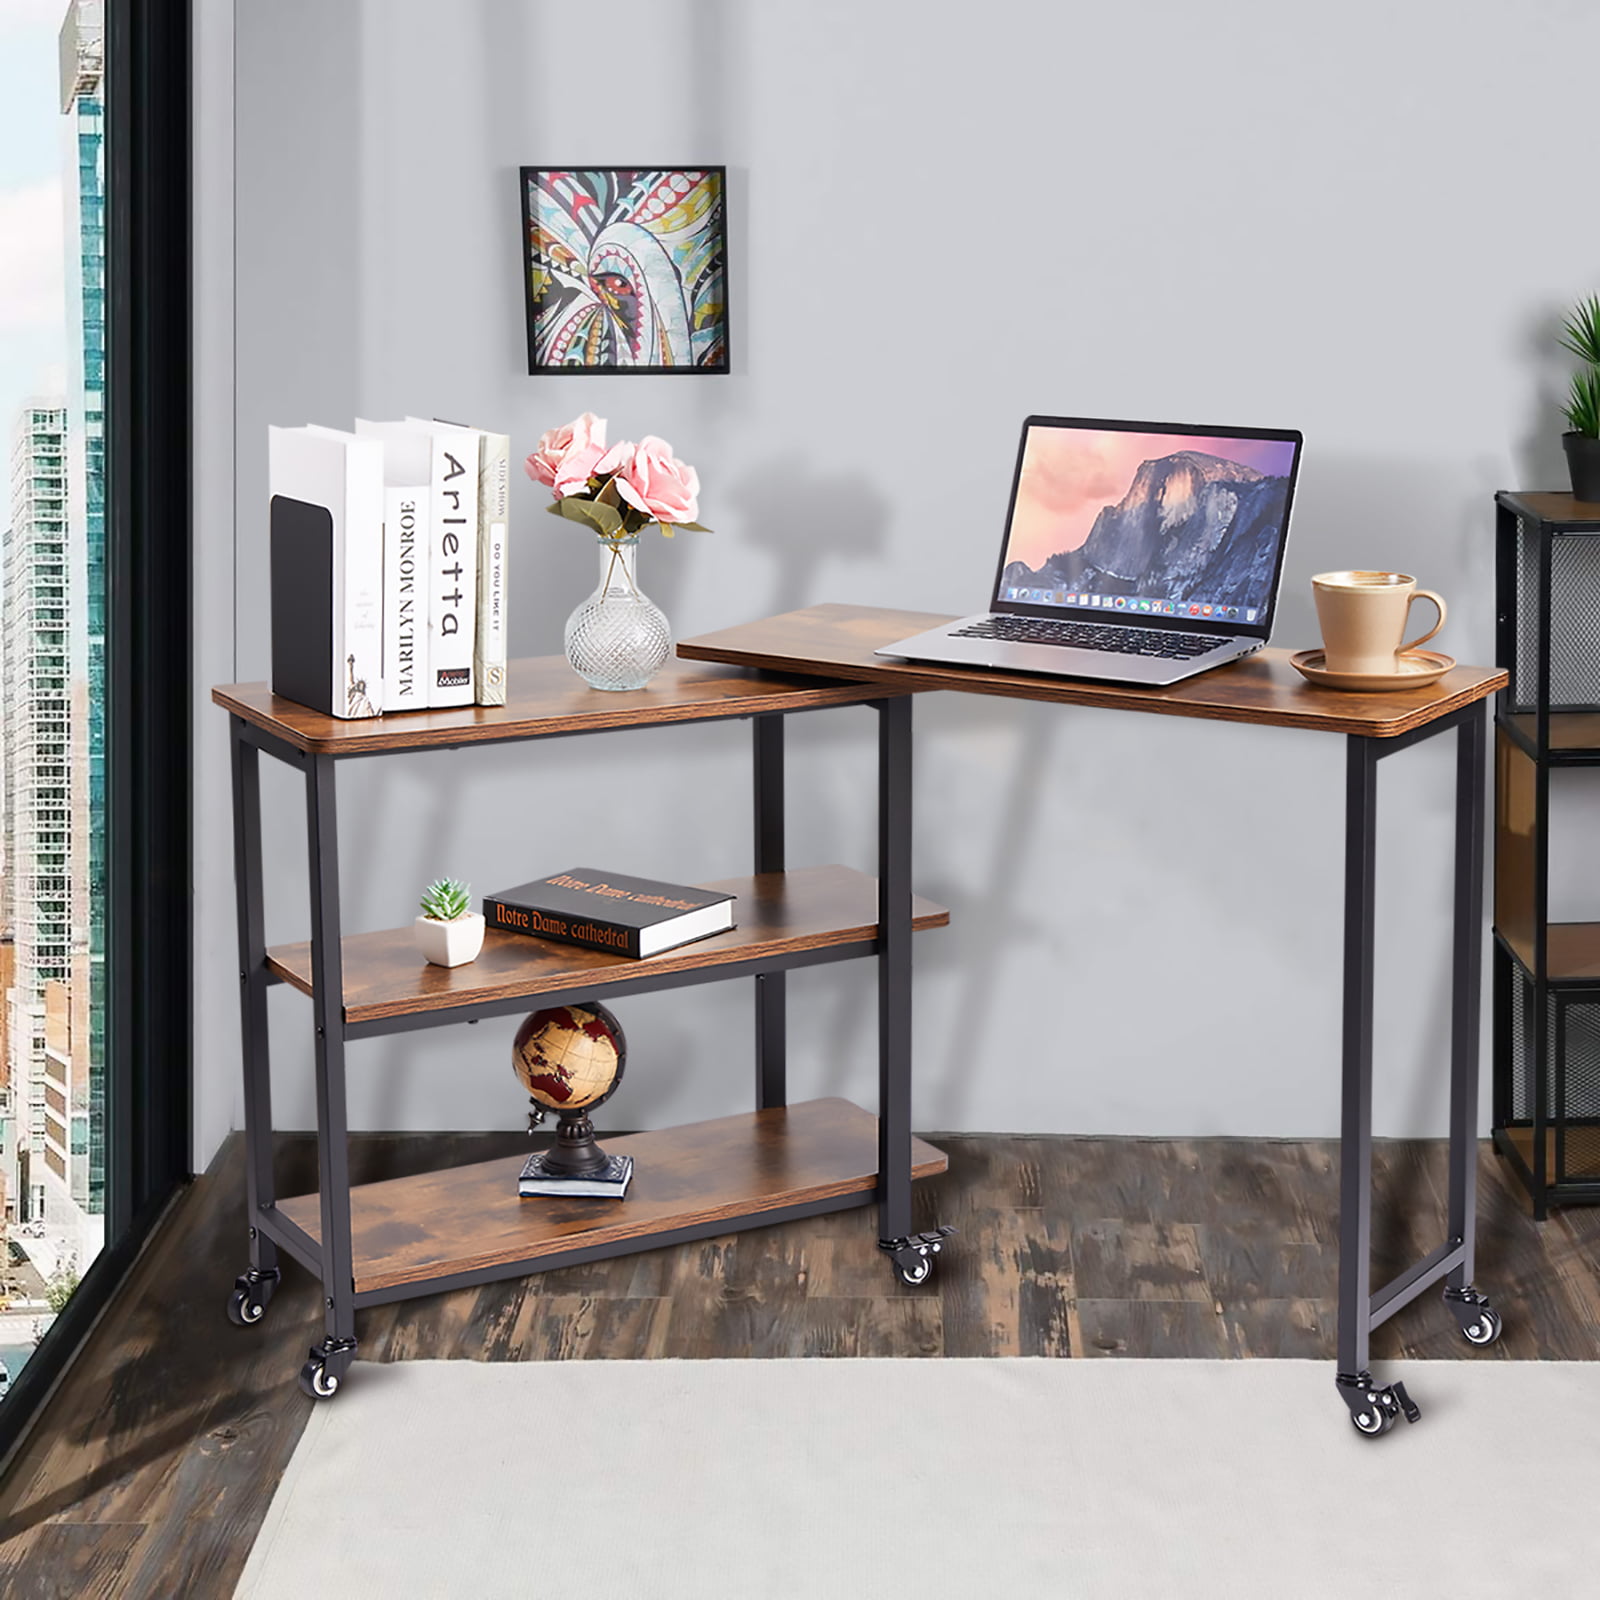 Details about   Computer Desk Laptop Table Study Desk Wood Home Office Desk w/Shelf New USA Hot 